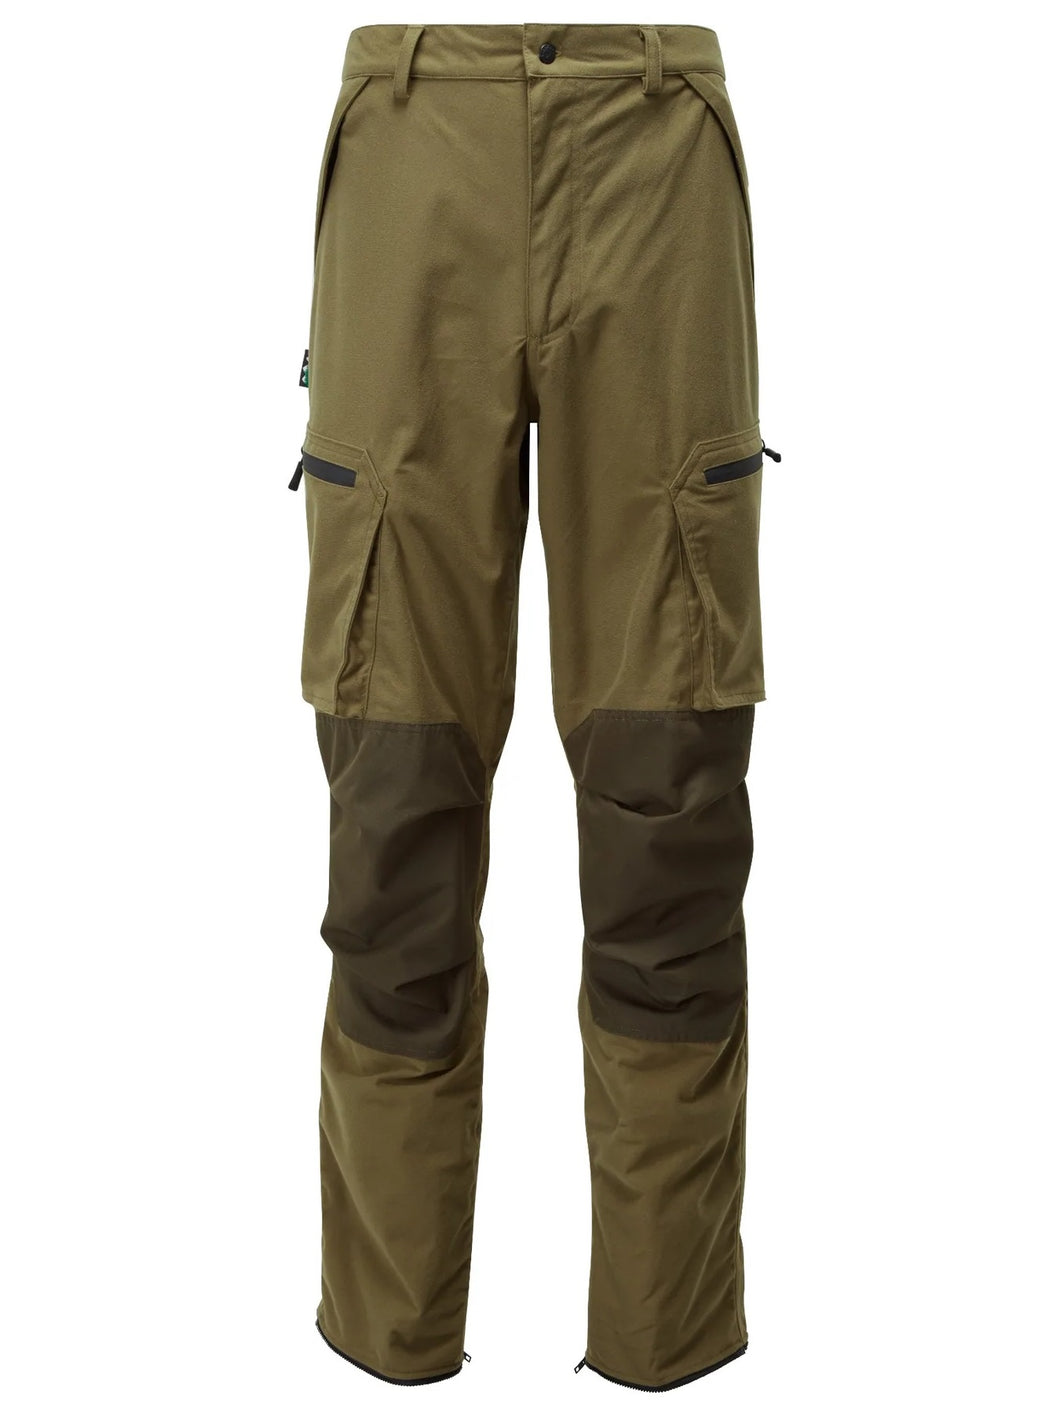 RIDGELINE Mens Pintail Explorer Trousers - Teak